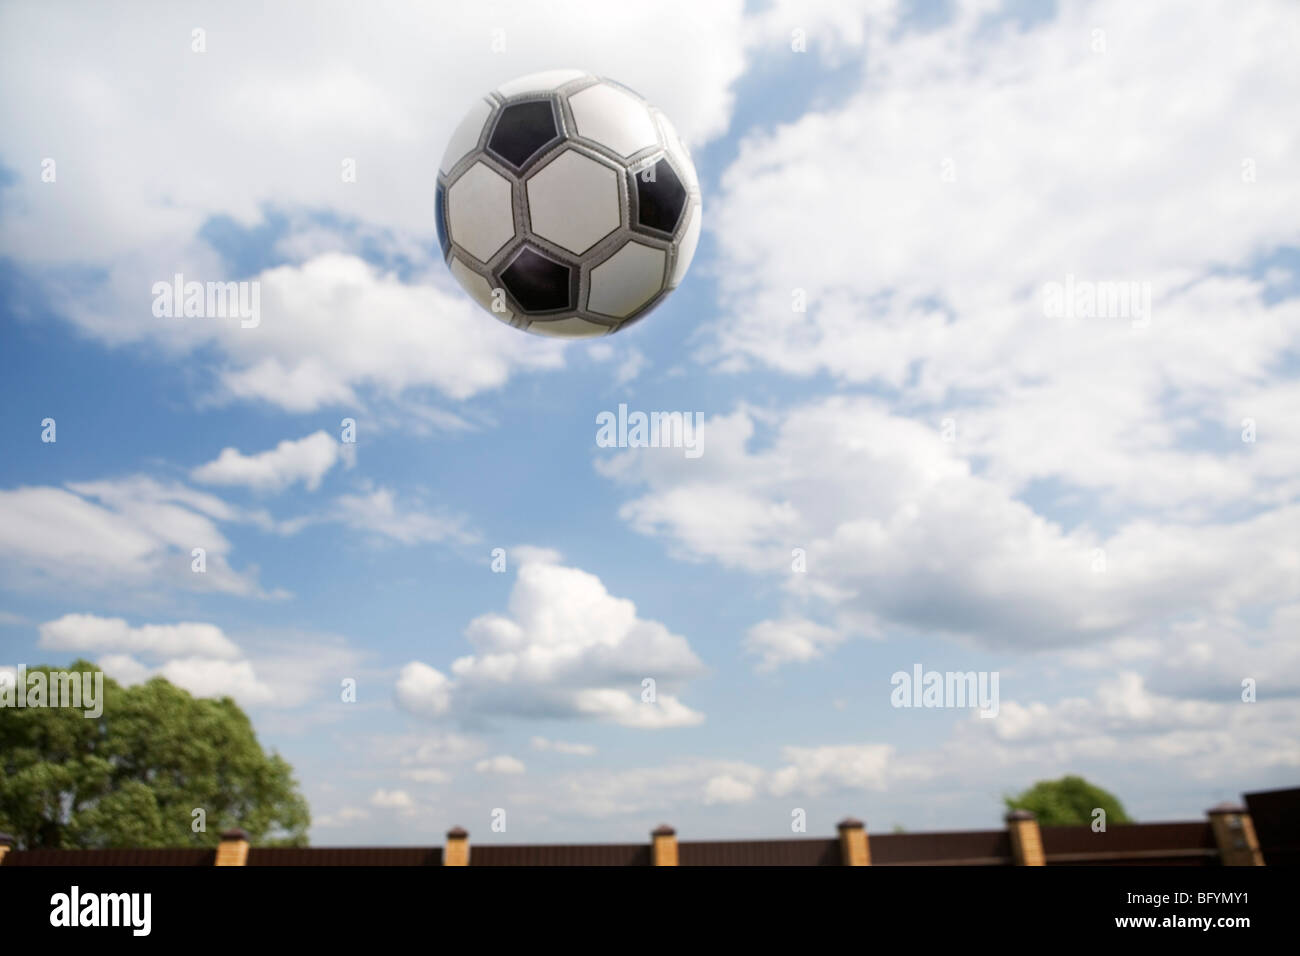 football flying through air Stock Photo